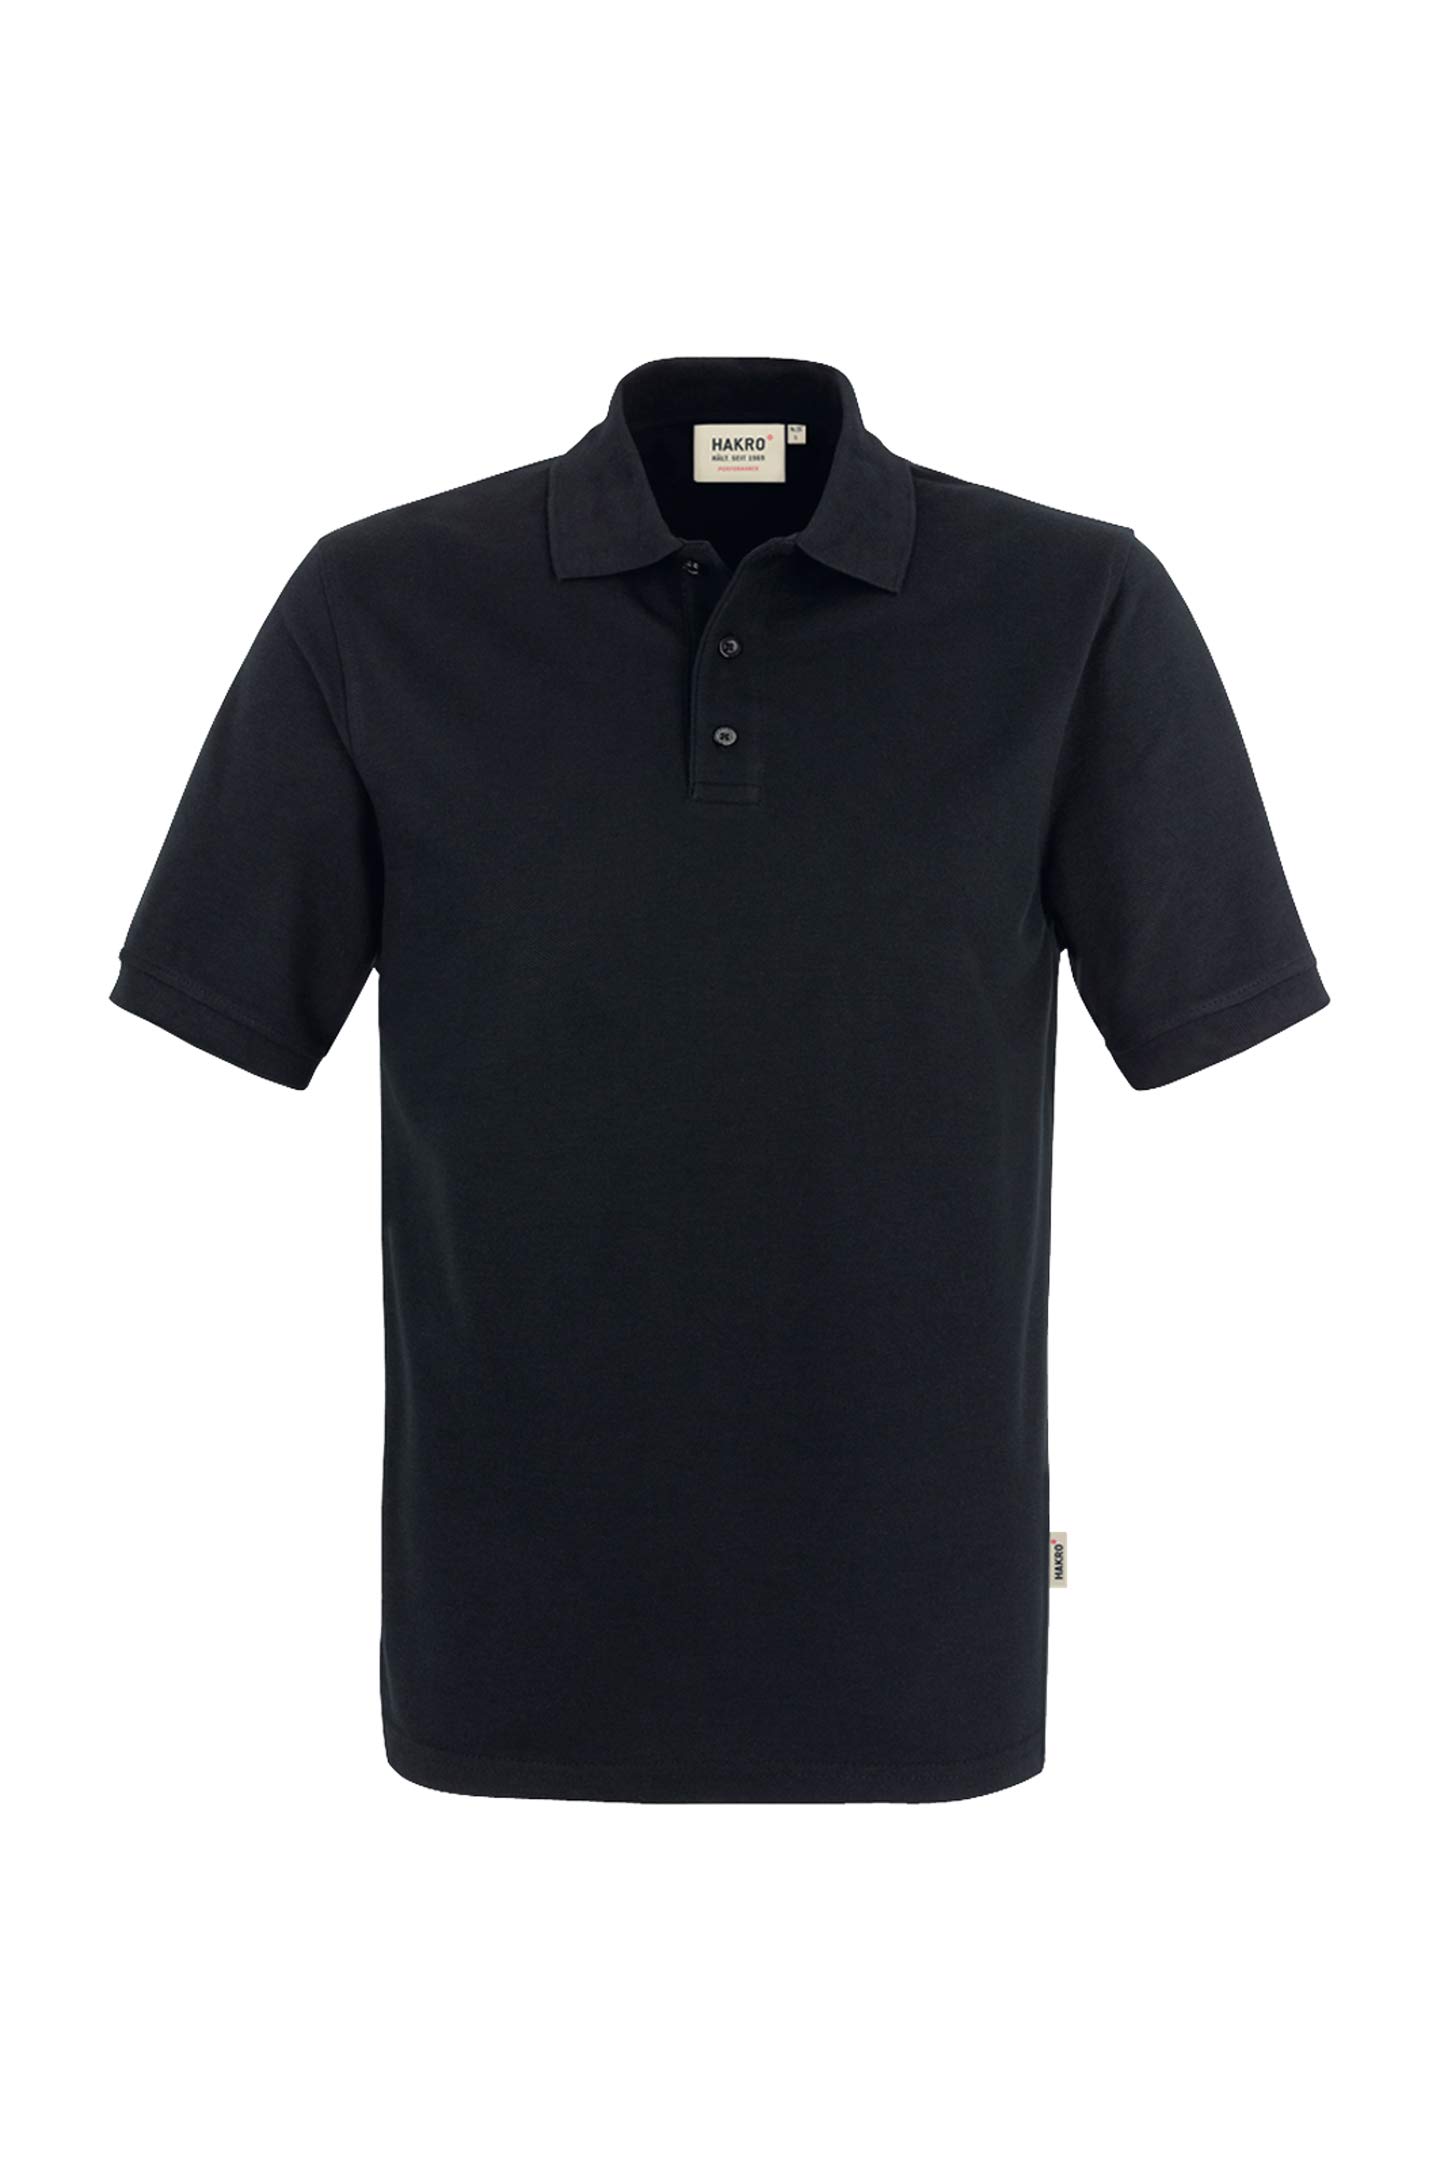 HAKRO Motoo Polo-Shirt schwarz Gr 2XL von HAKRO